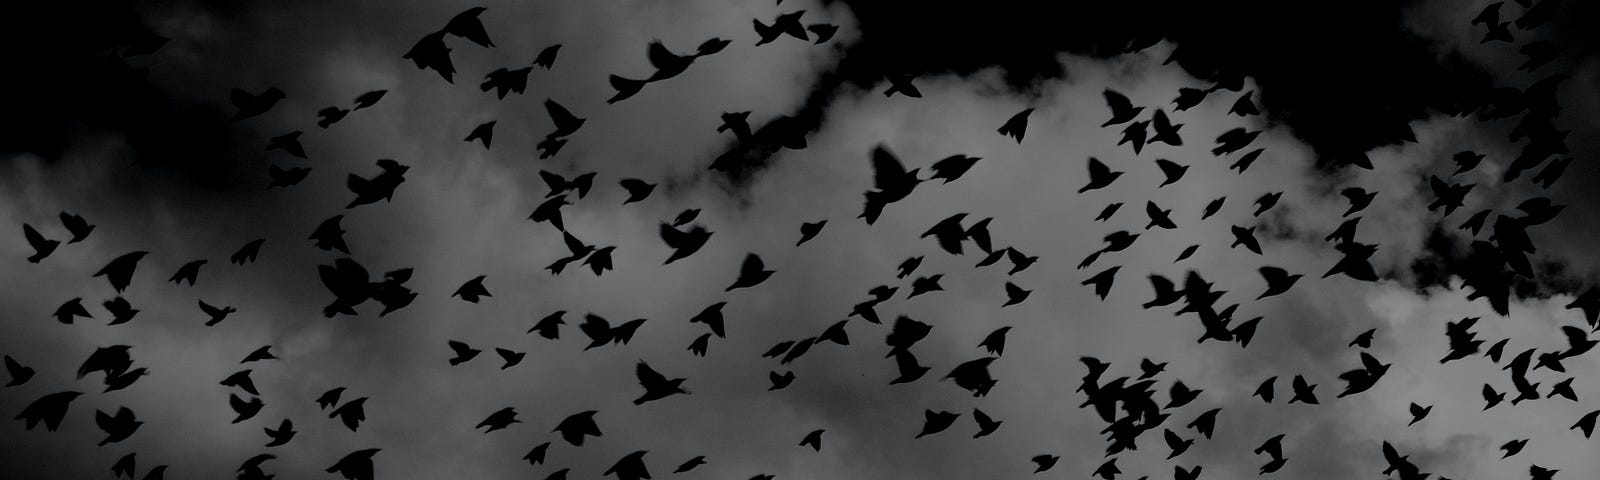 Flock of birds, black and white